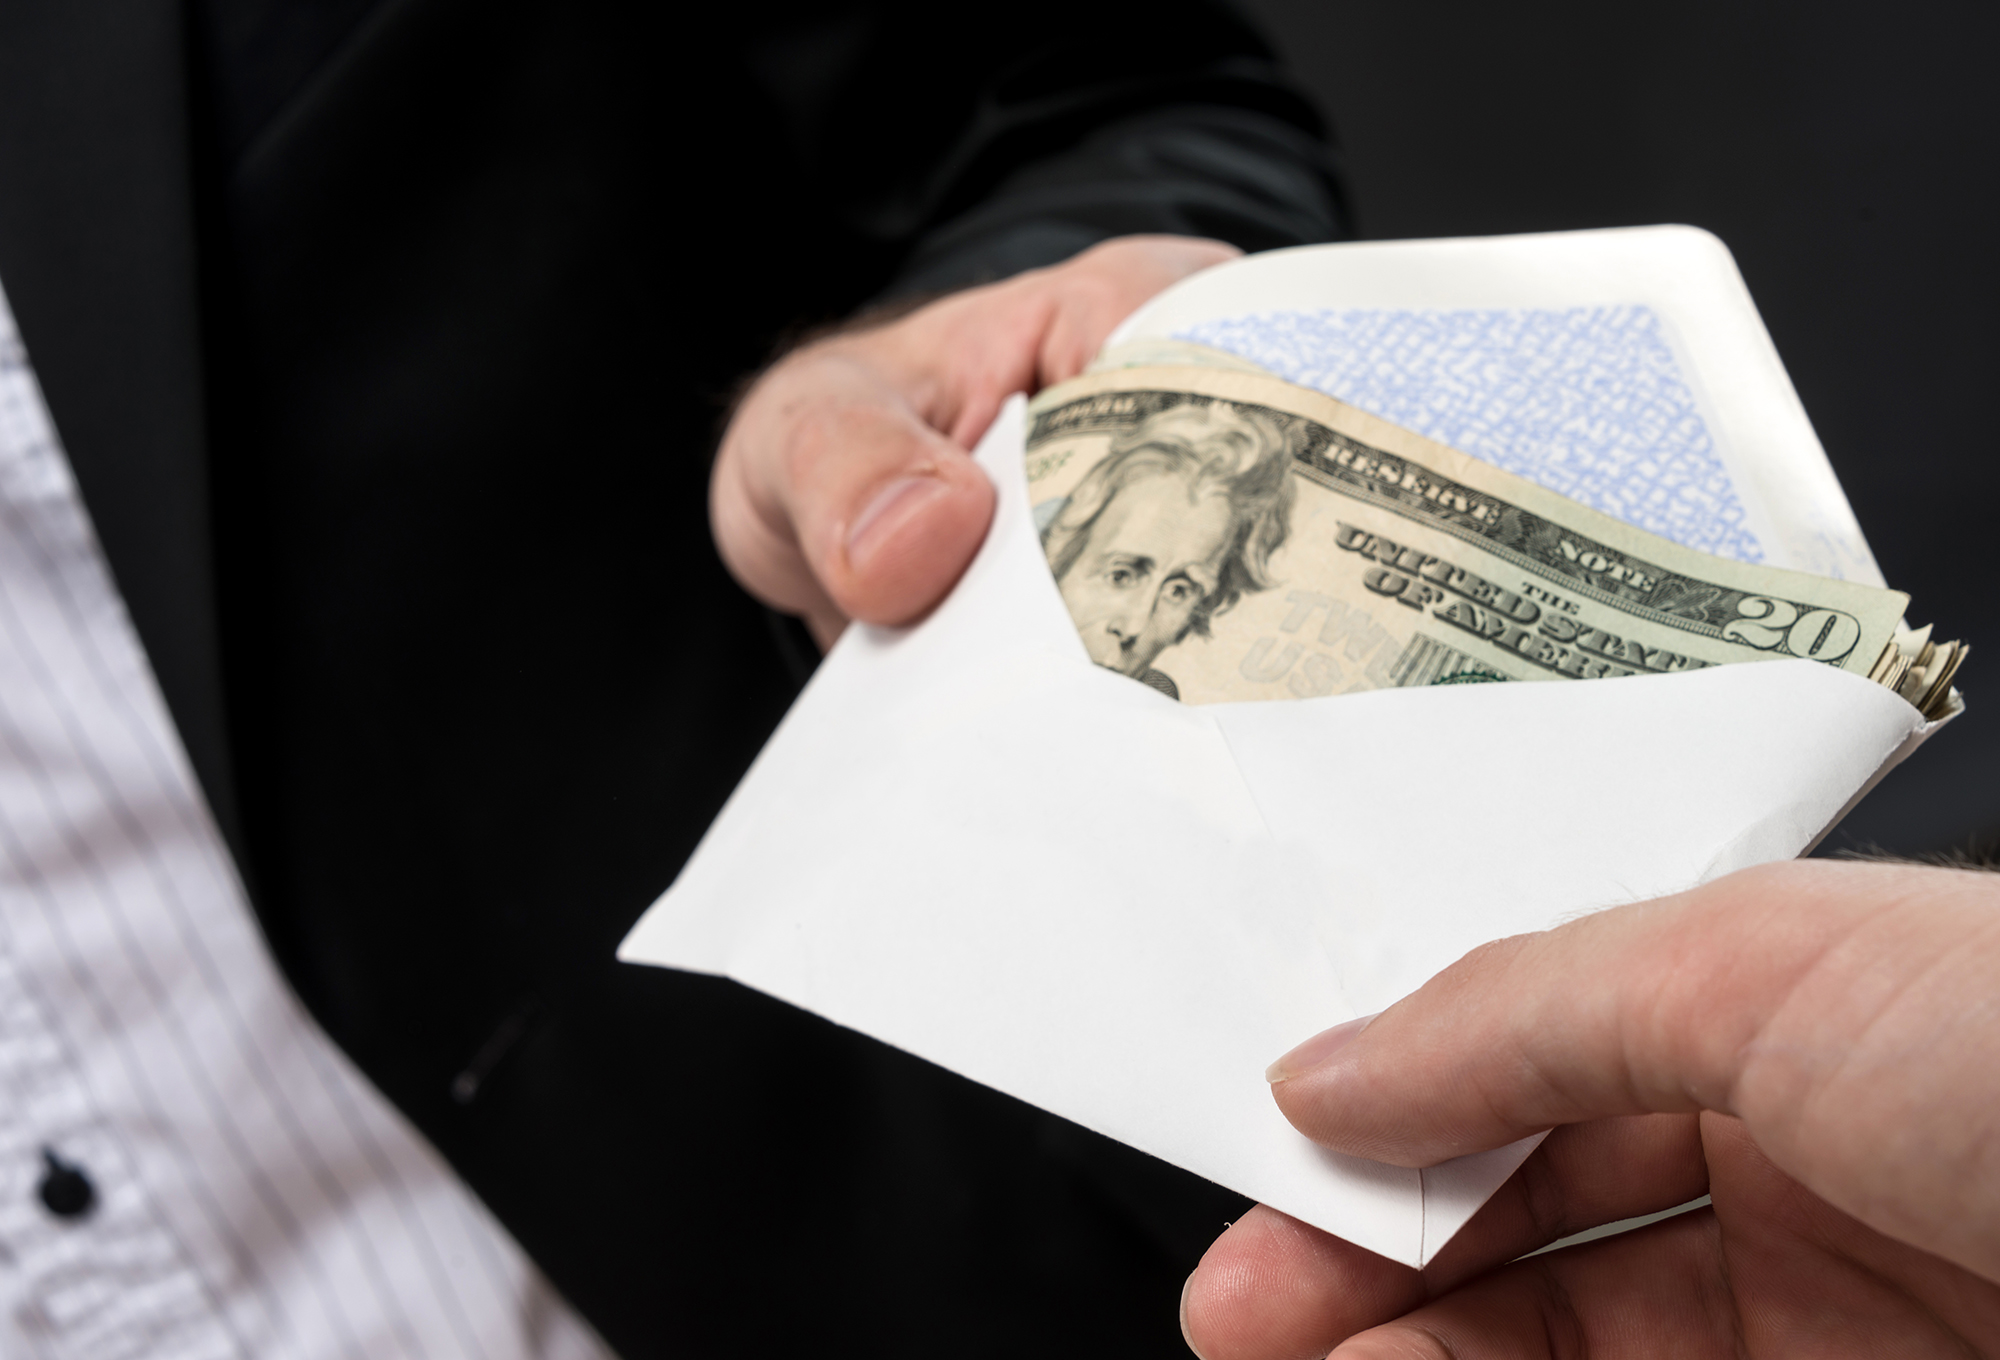 People Exchanging Envelope Full of Money (Stock Image)